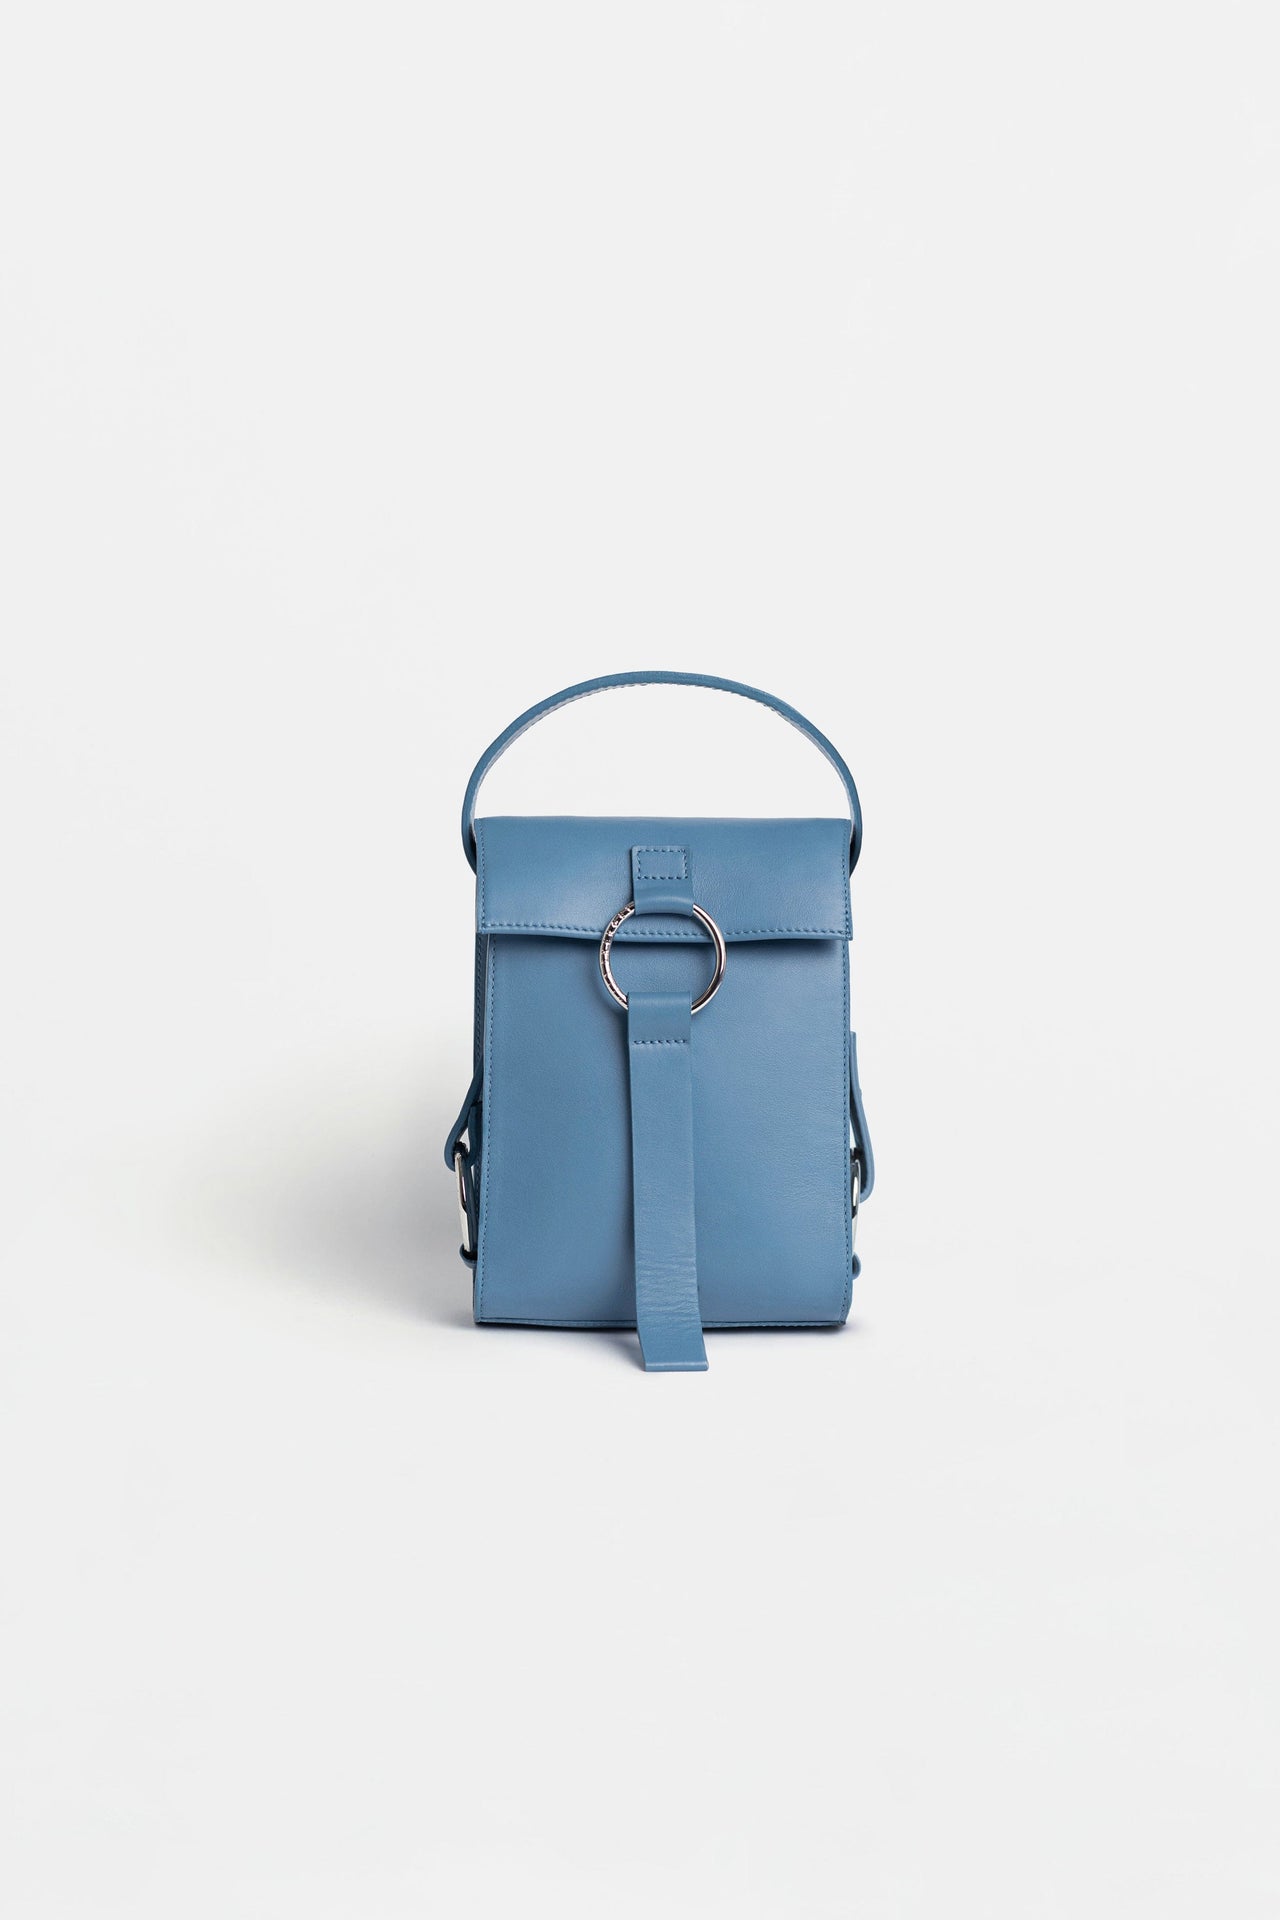 The MINI BAG Azul Blue